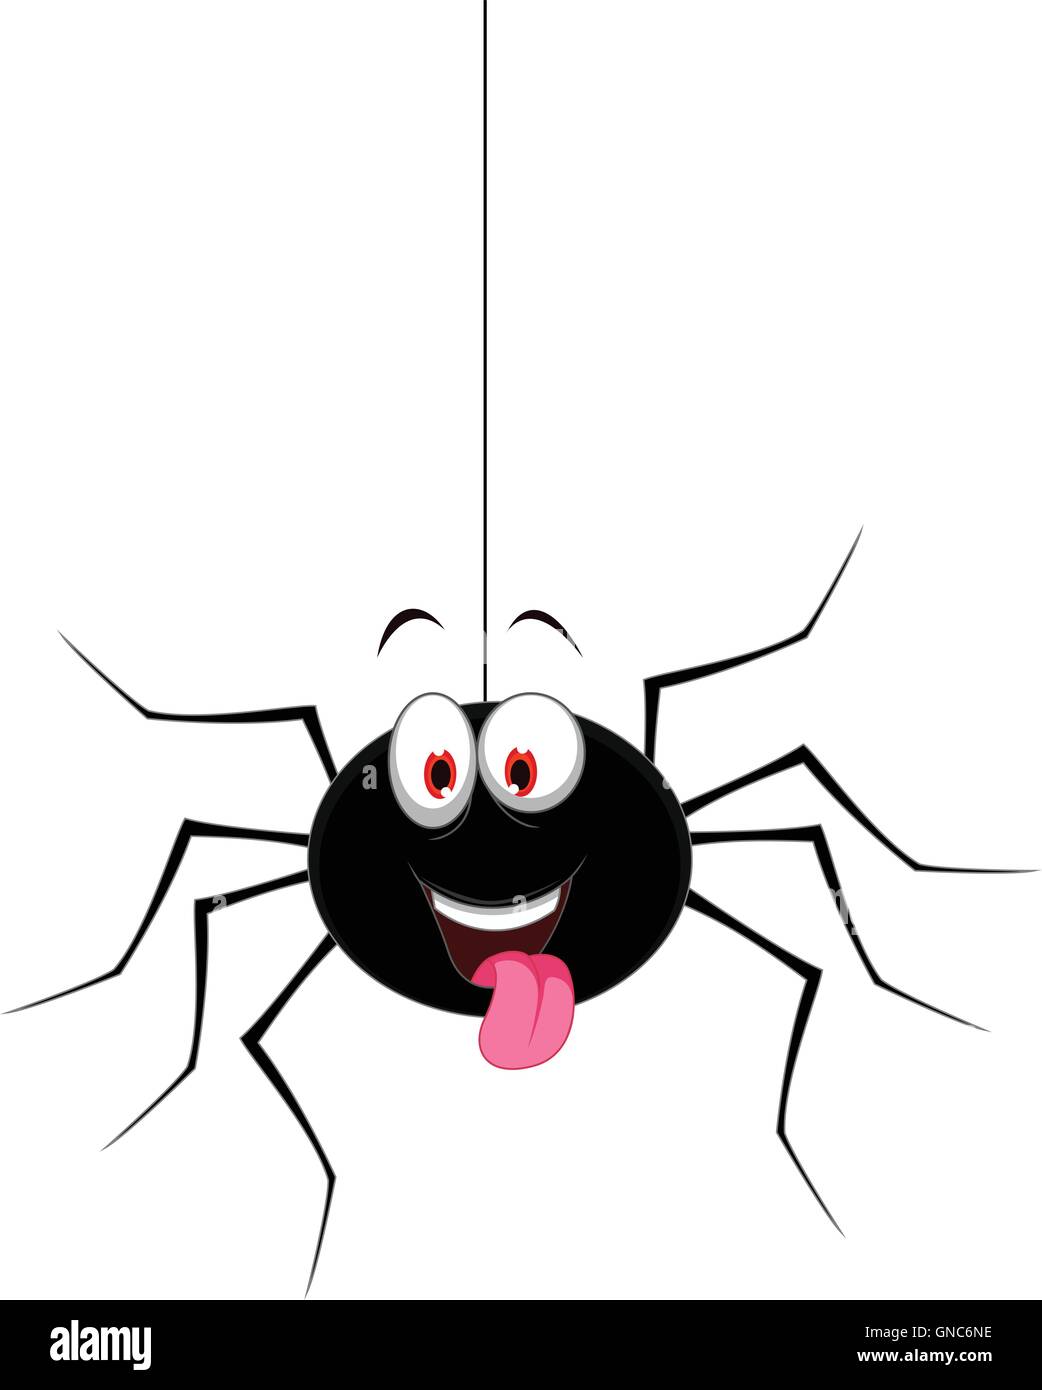 cute spider cartoon for you design Stock Vector